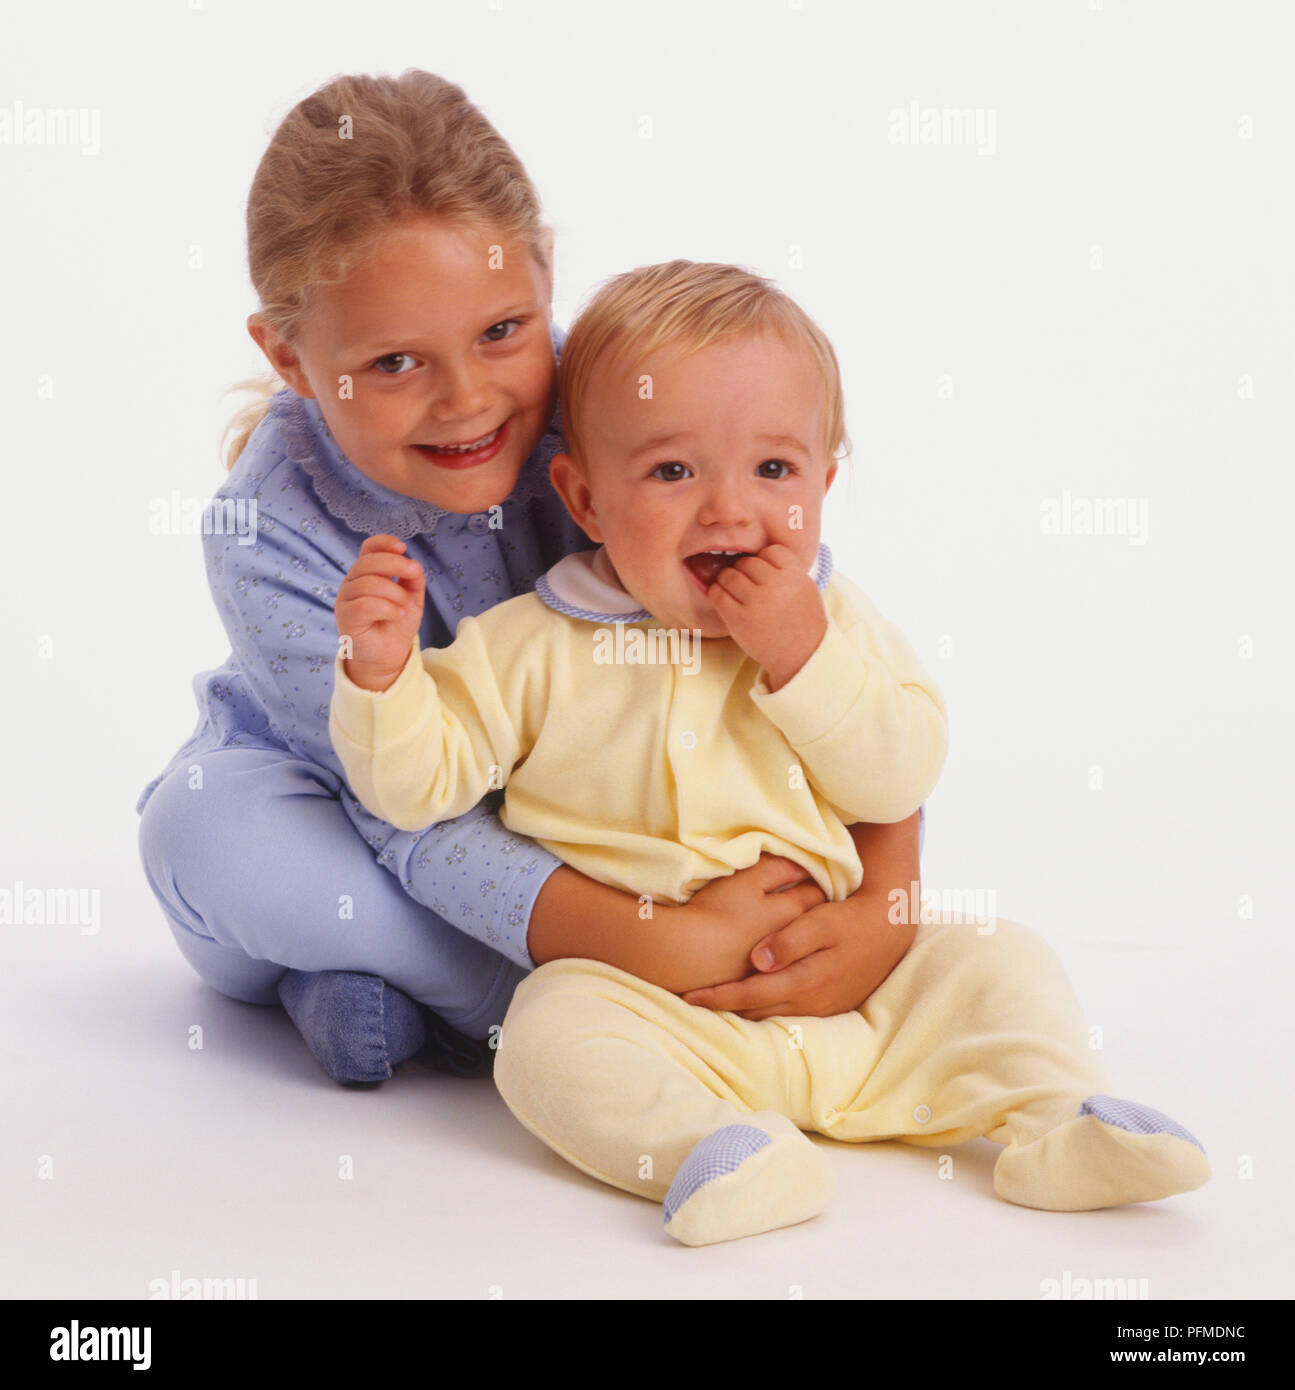 https://c8.alamy.com/comp/PFMDNC/blonde-girl-holding-baby-boy-PFMDNC.jpg